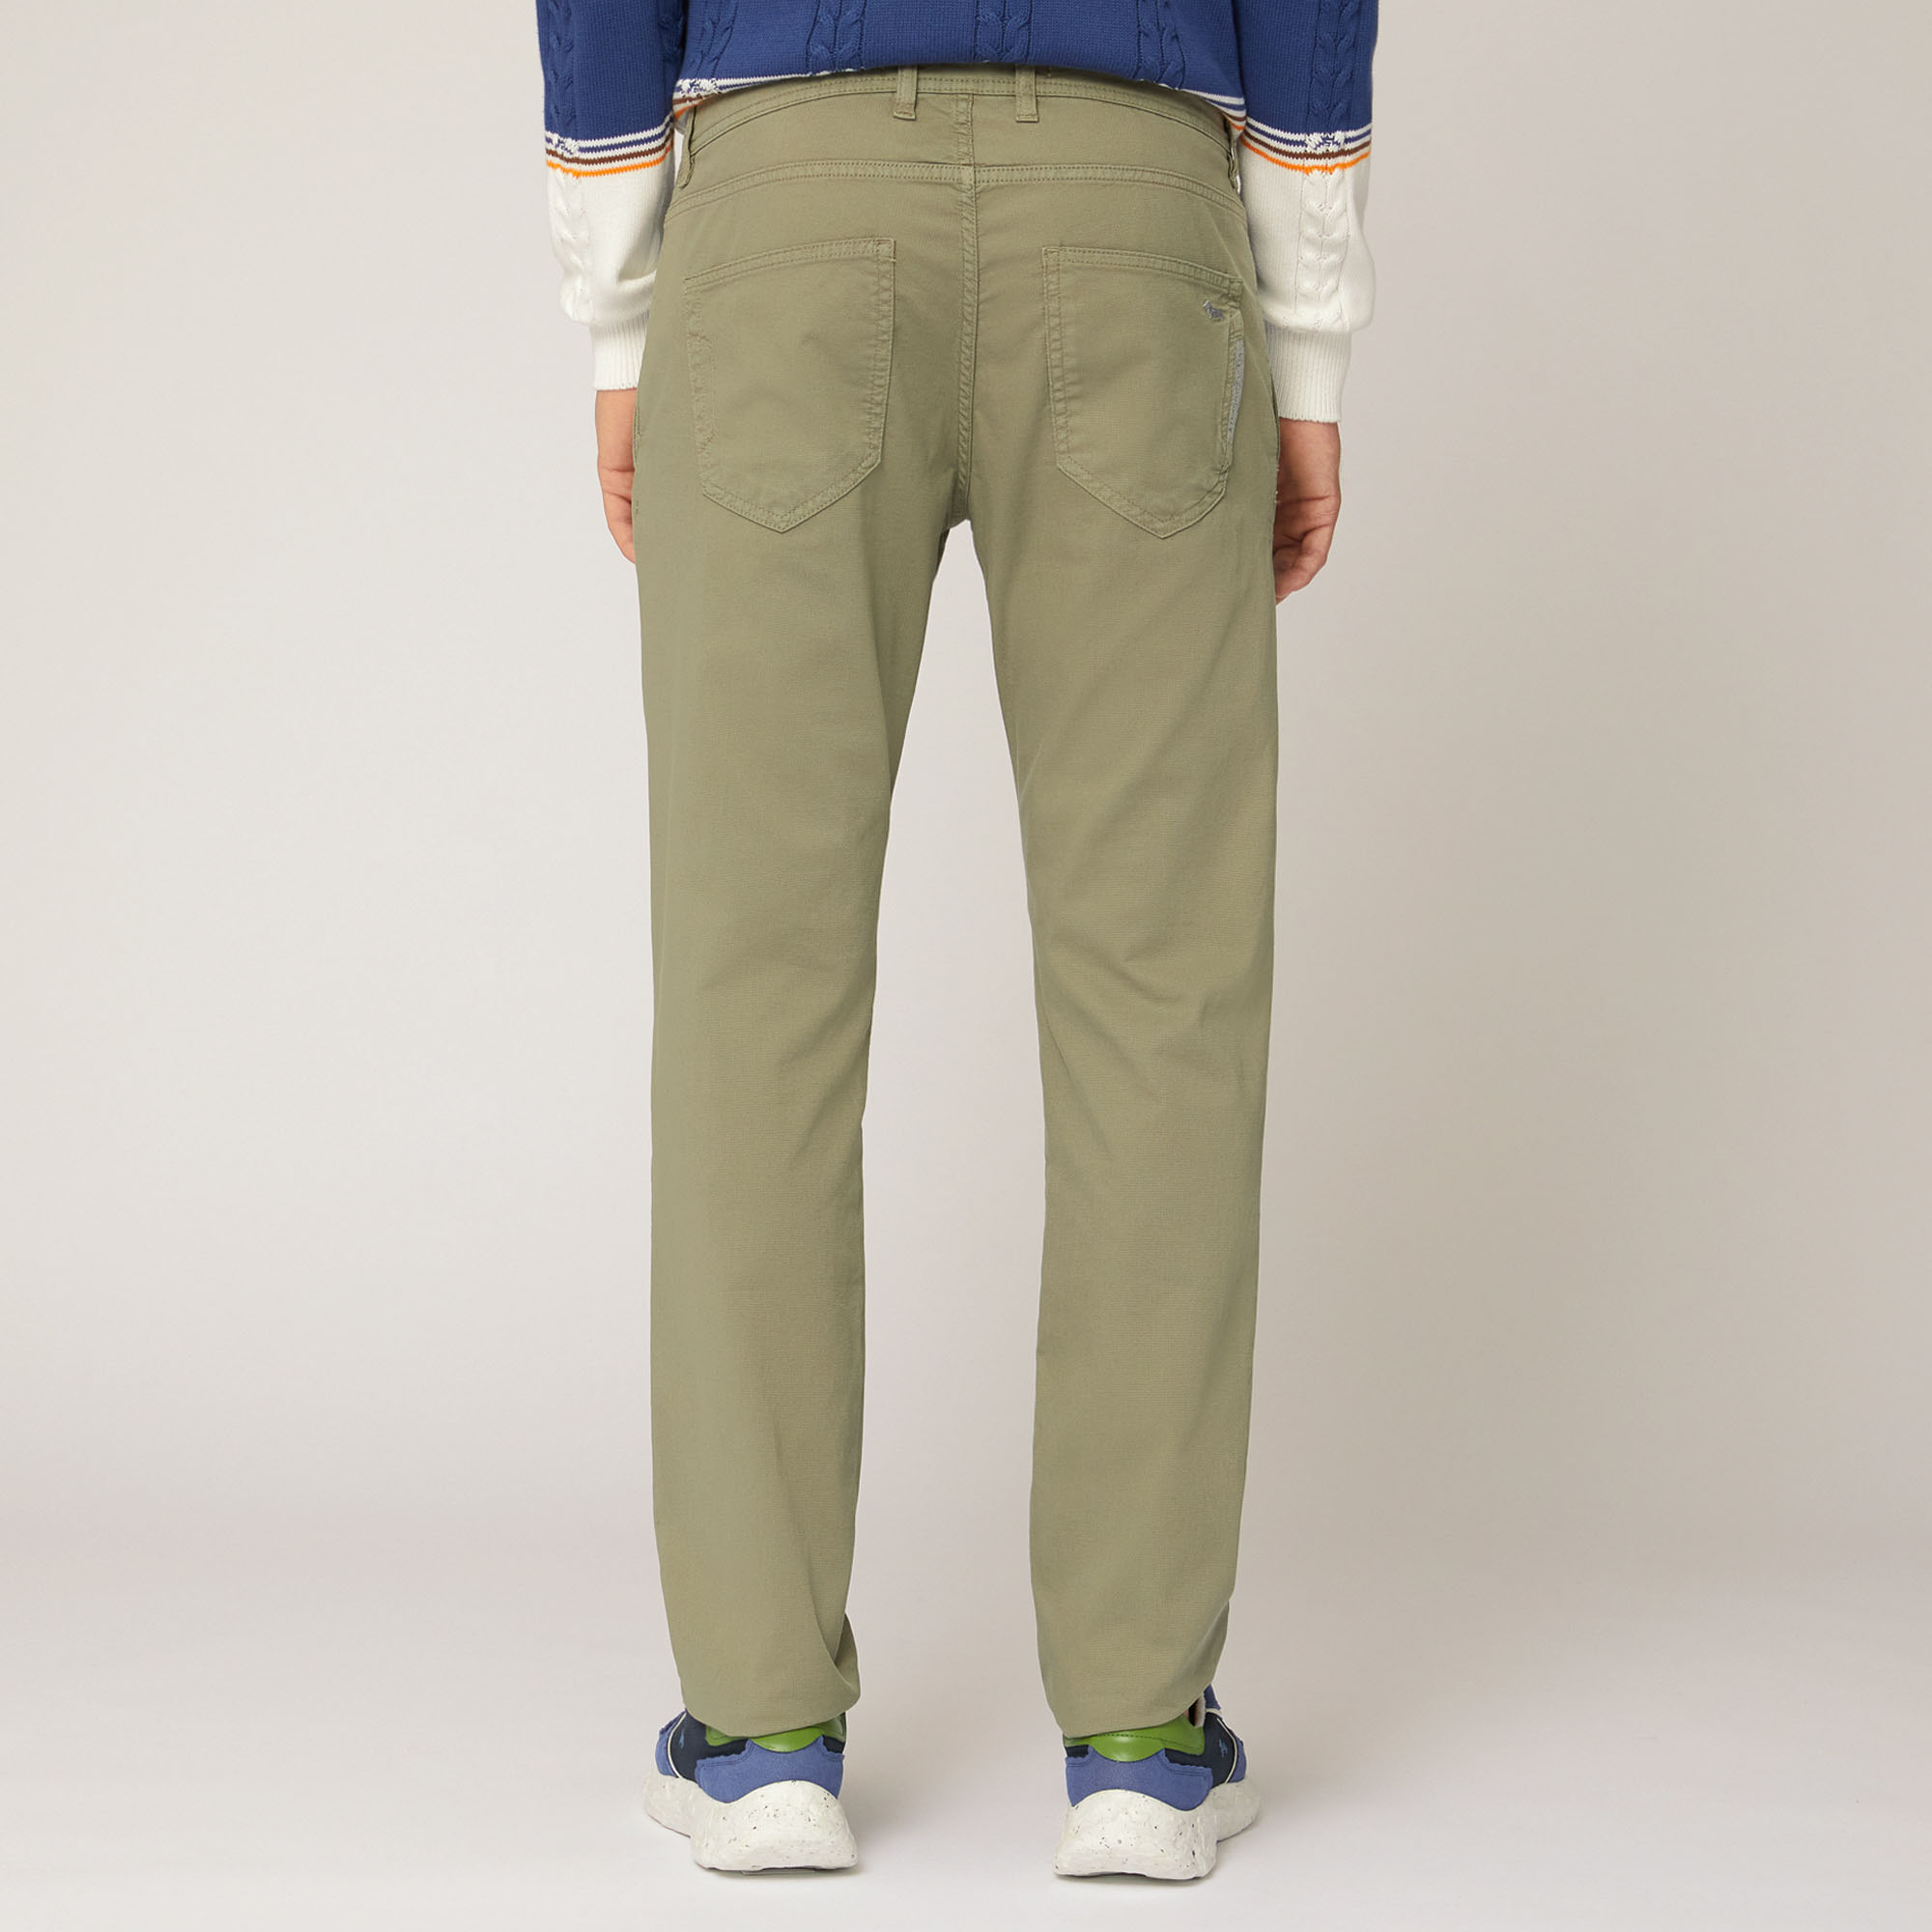 Pantaloni Colorfive, Verde, large image number 1